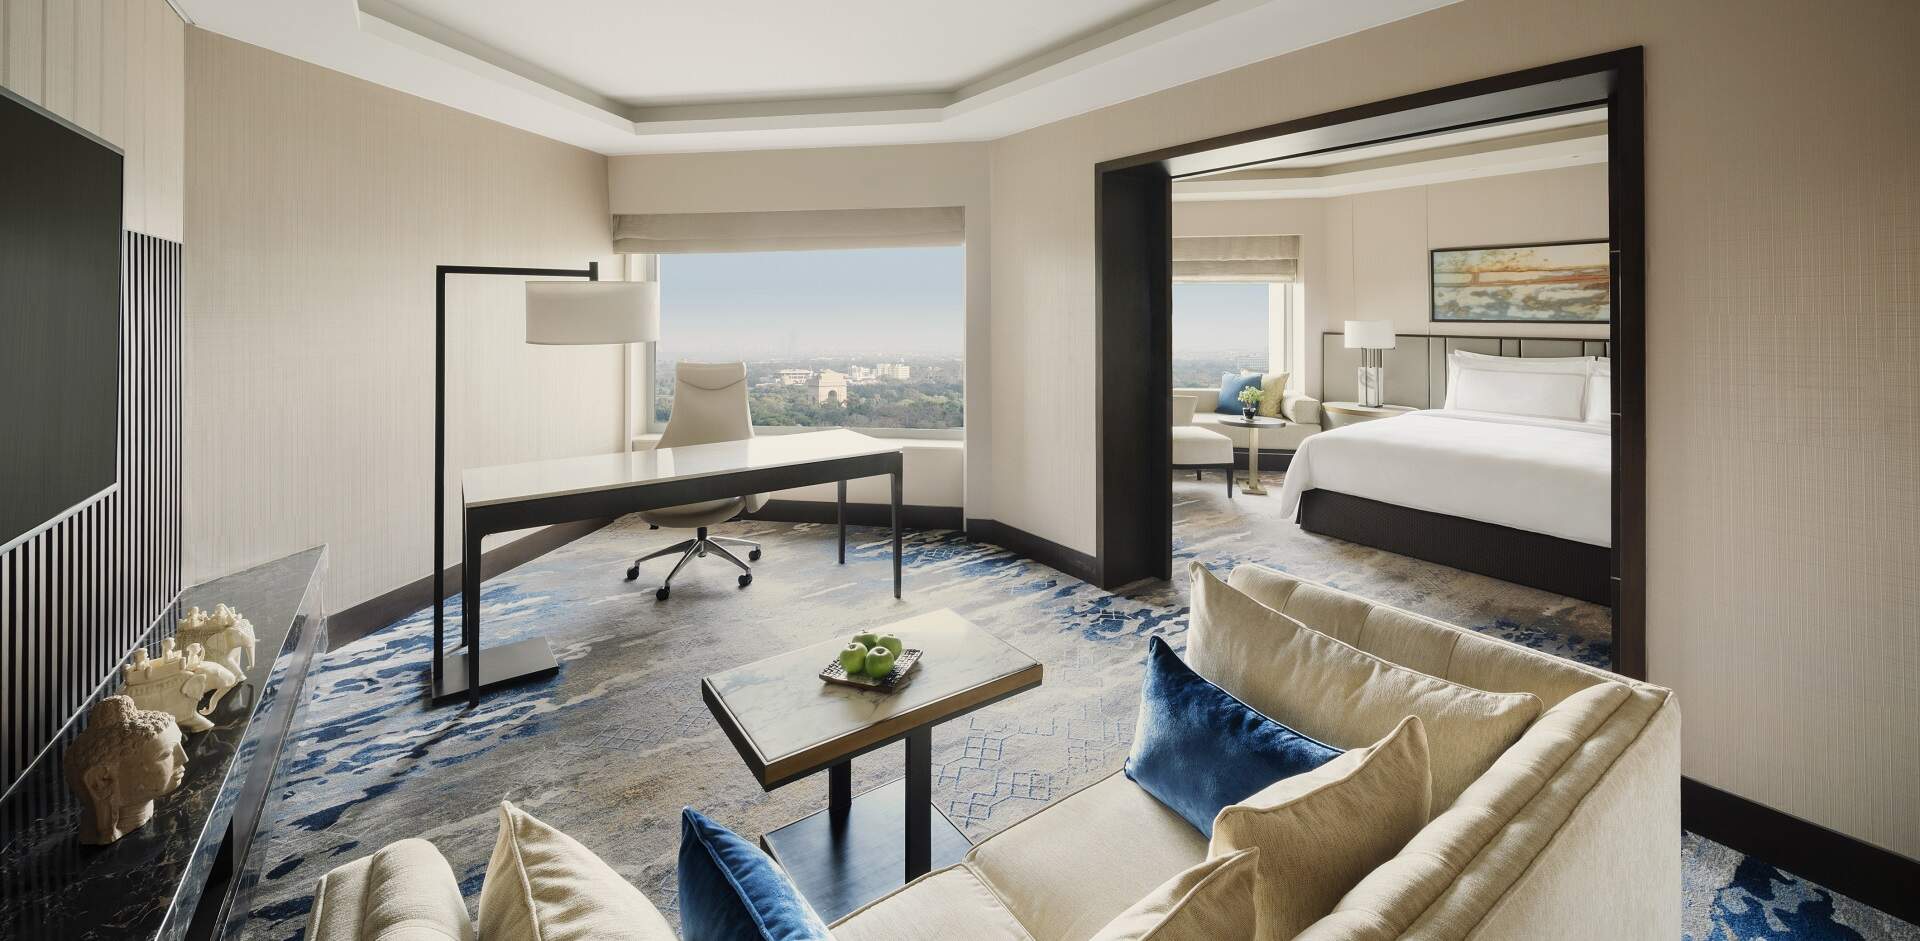 New dimension of luxury at Bahman suite - Della Resorts